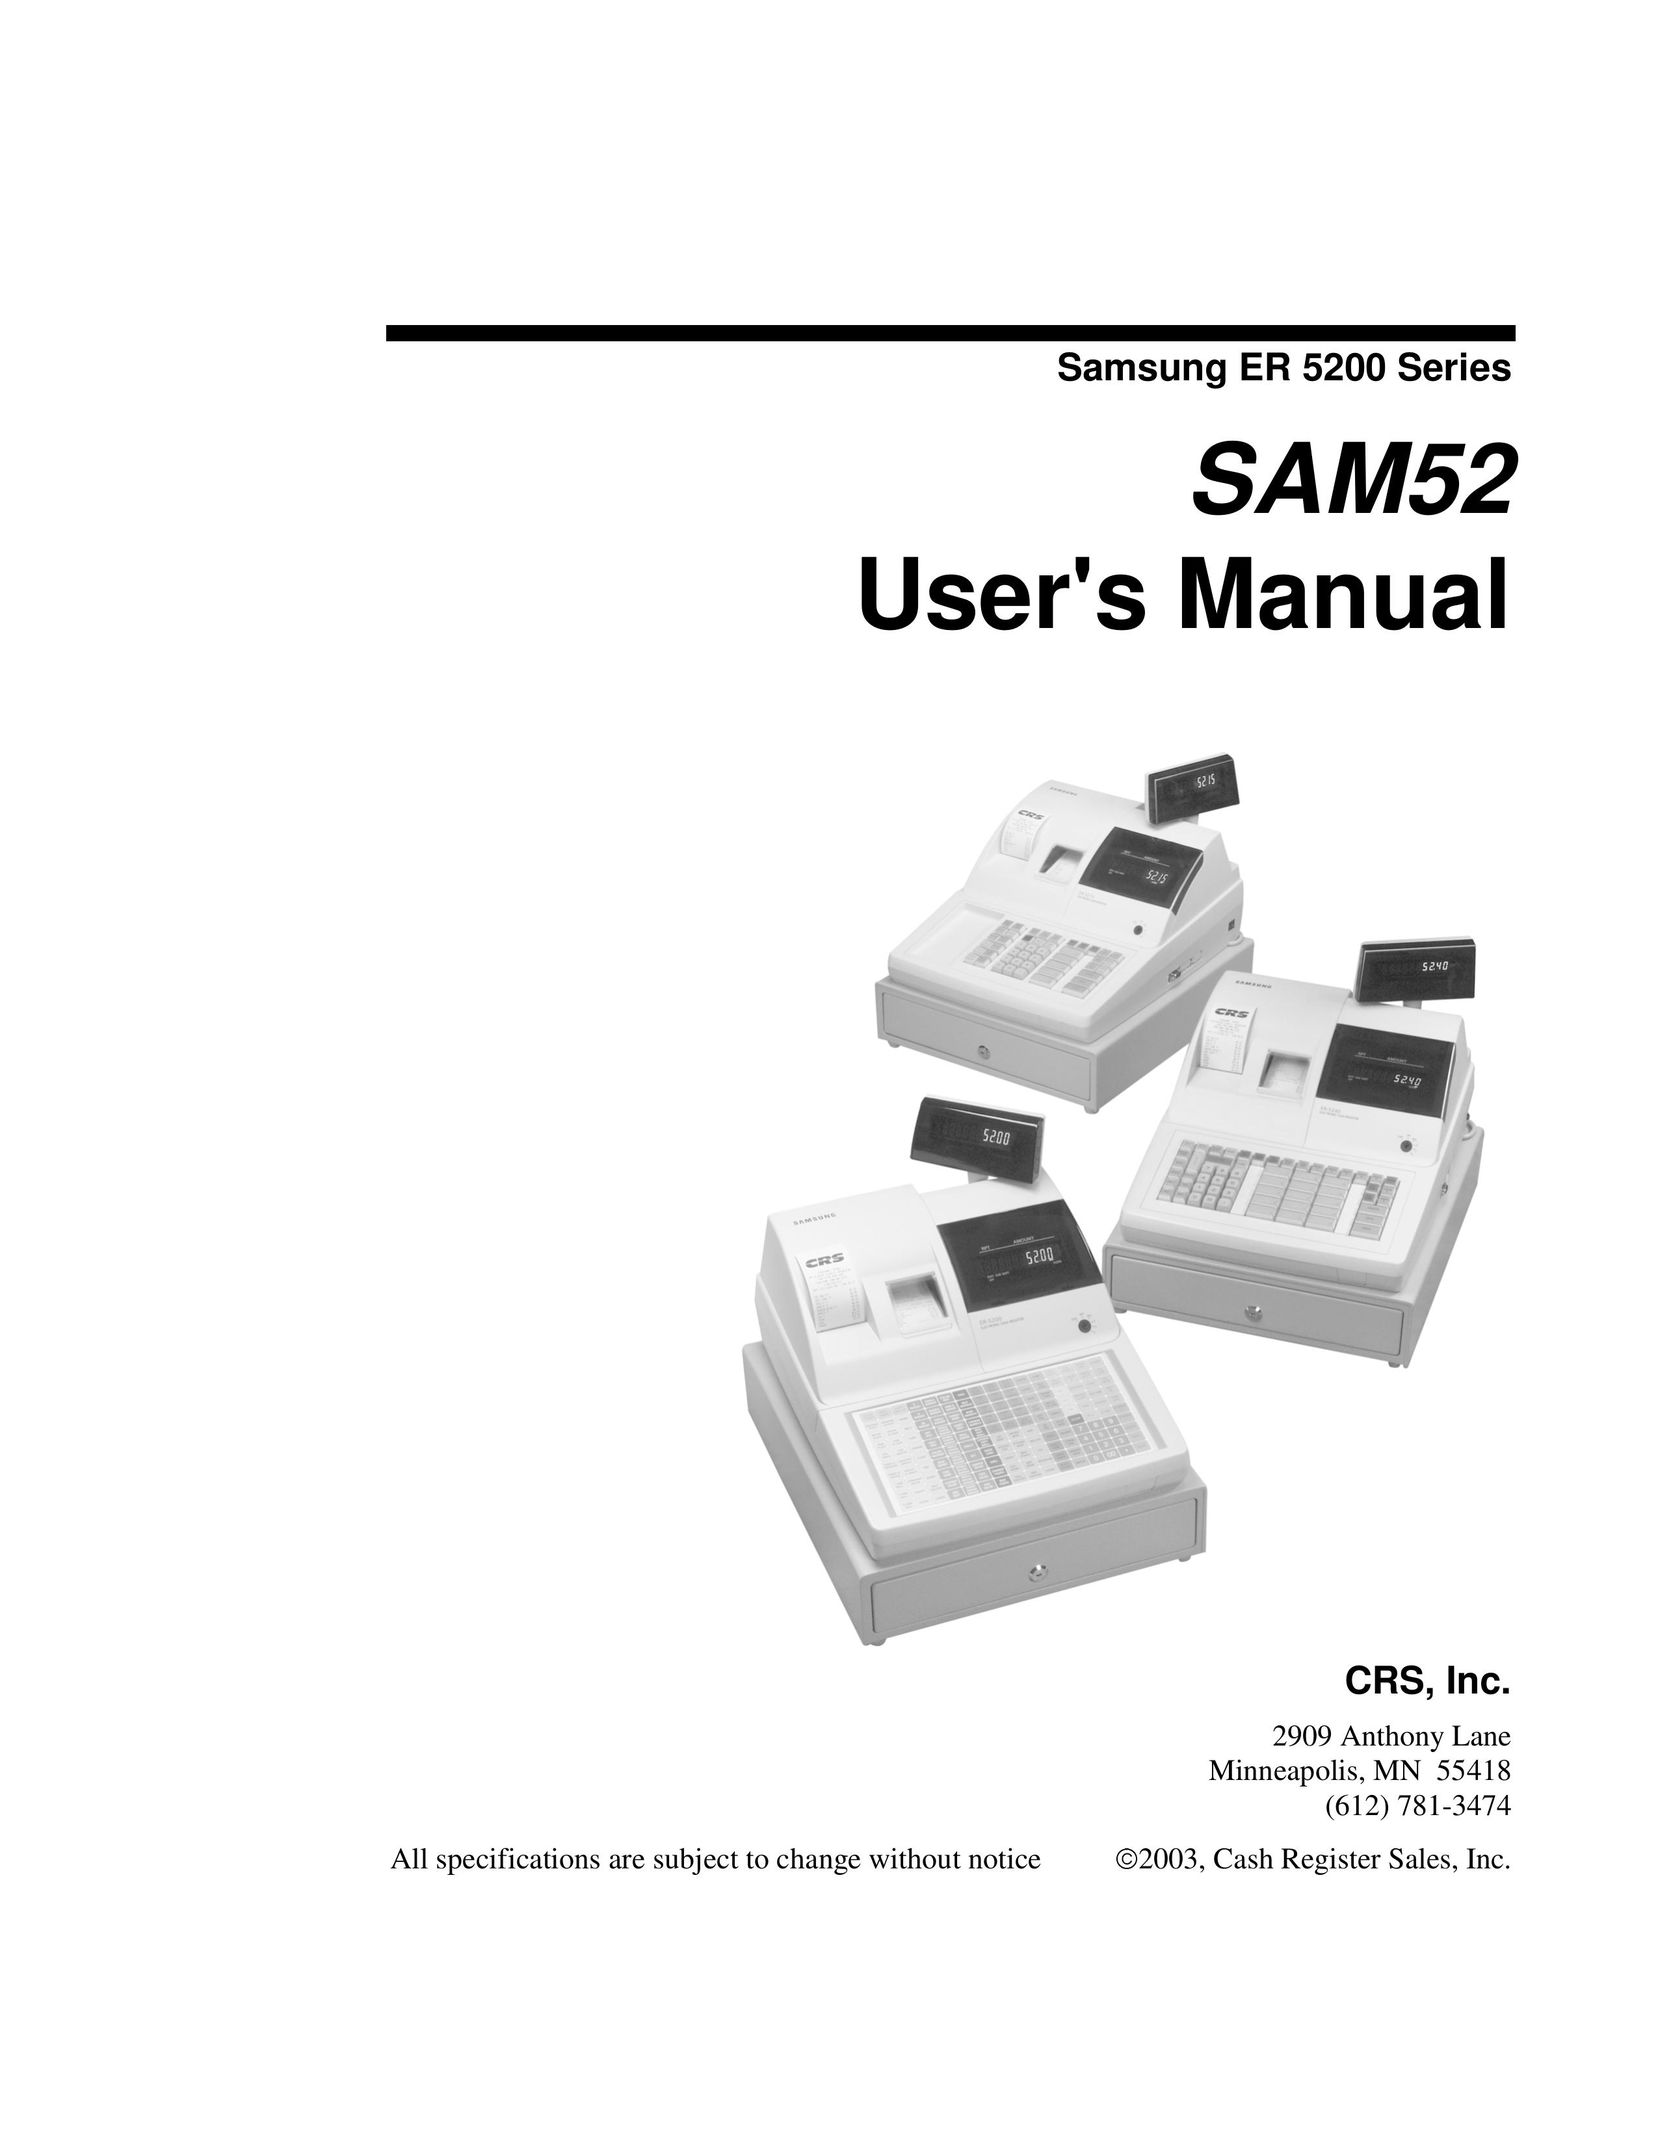 Samsung SAM52 Cash Register User Manual